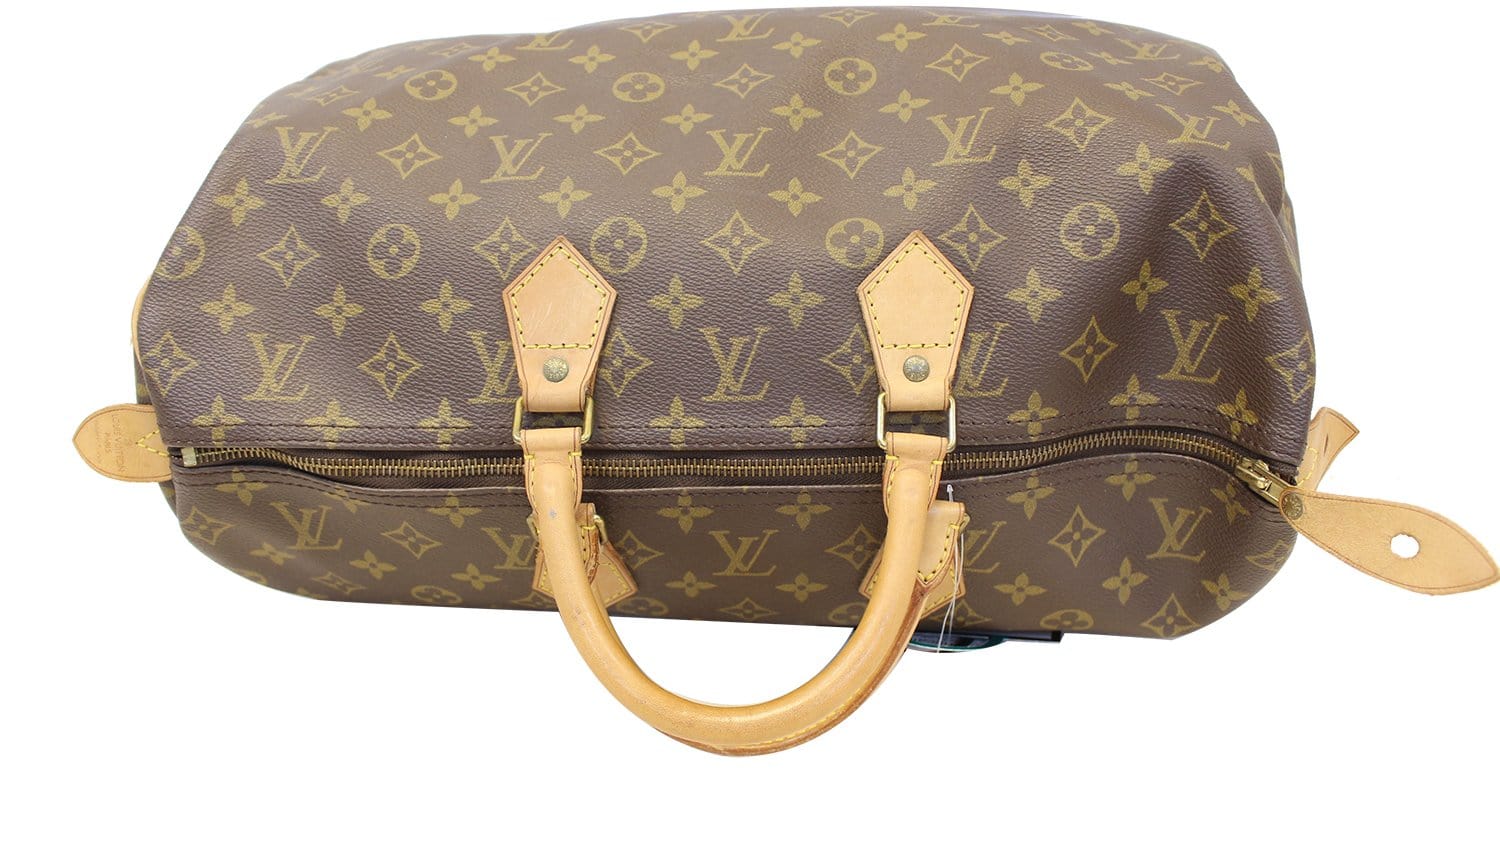 Shopbop Archive Louis Vuitton Speedy 40 Monogram Bag